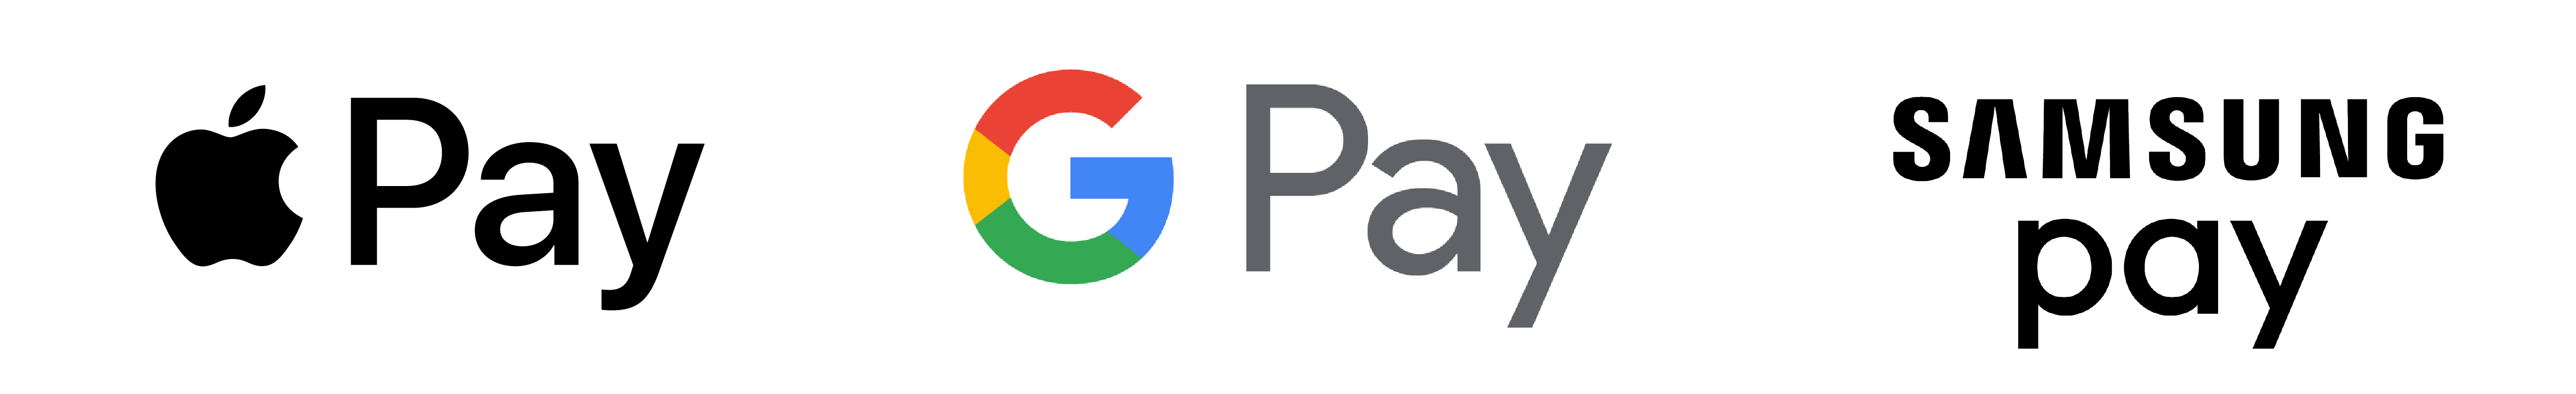 Apple, Google, and Samsung Pay Logos